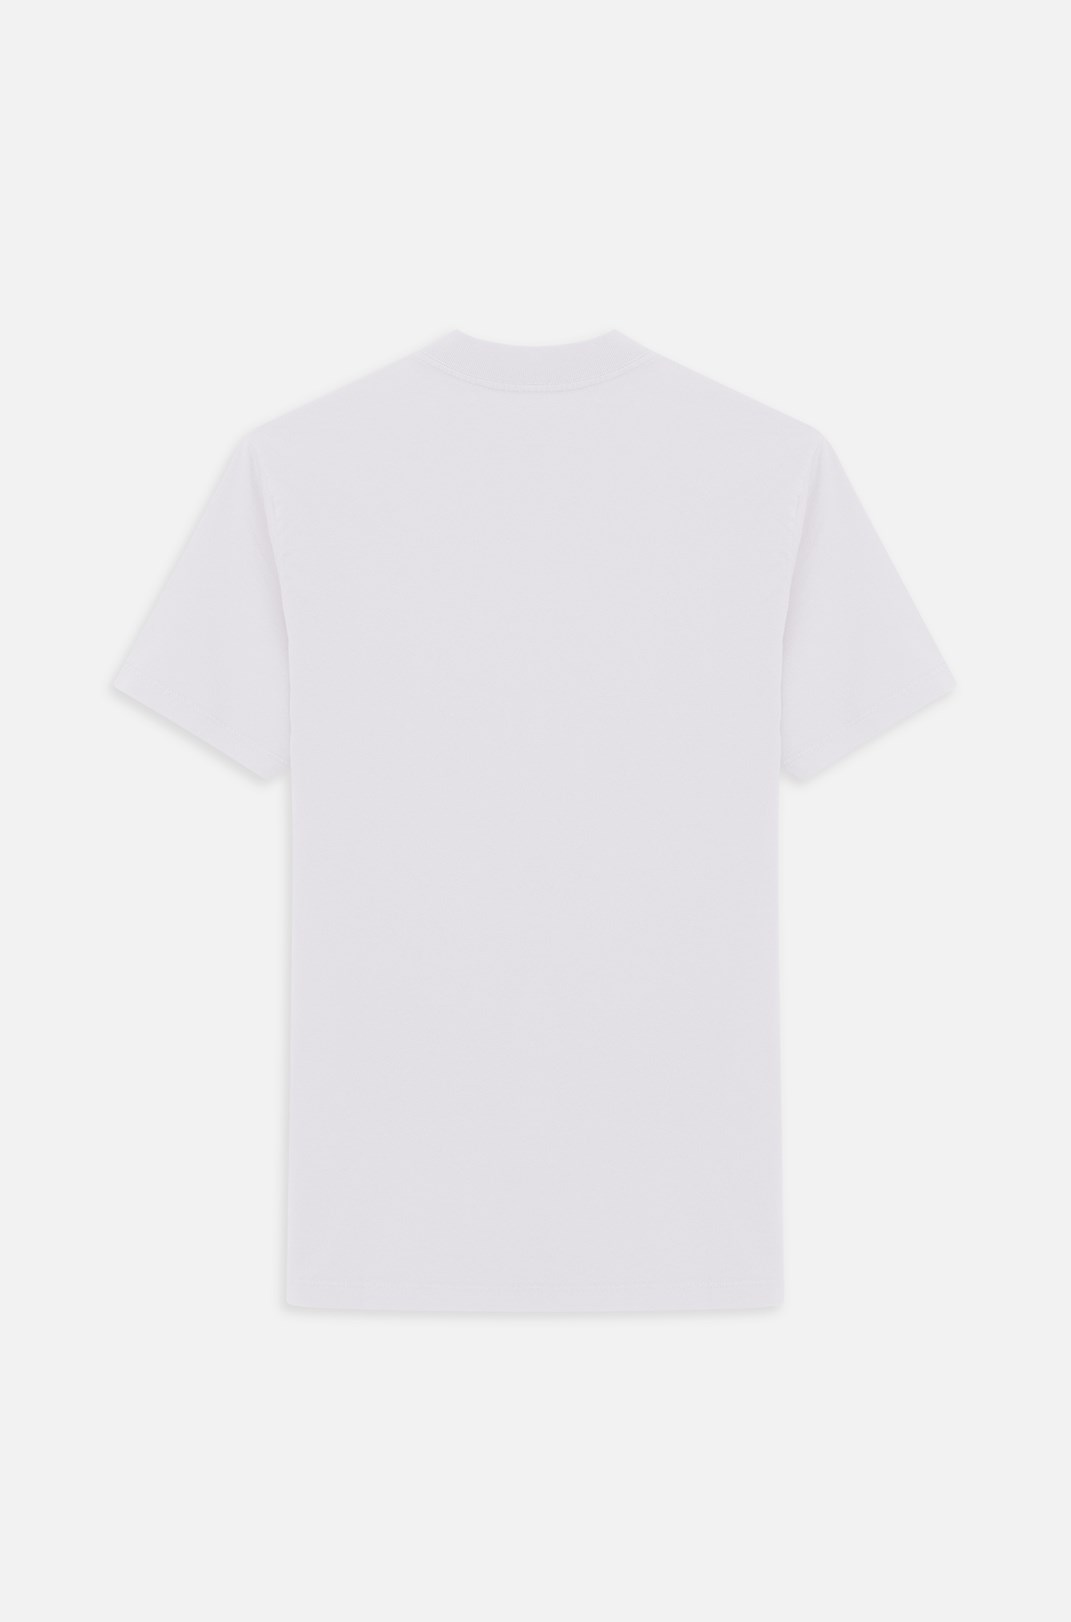 Camiseta Bold Approve Chromatic Branca E Preta